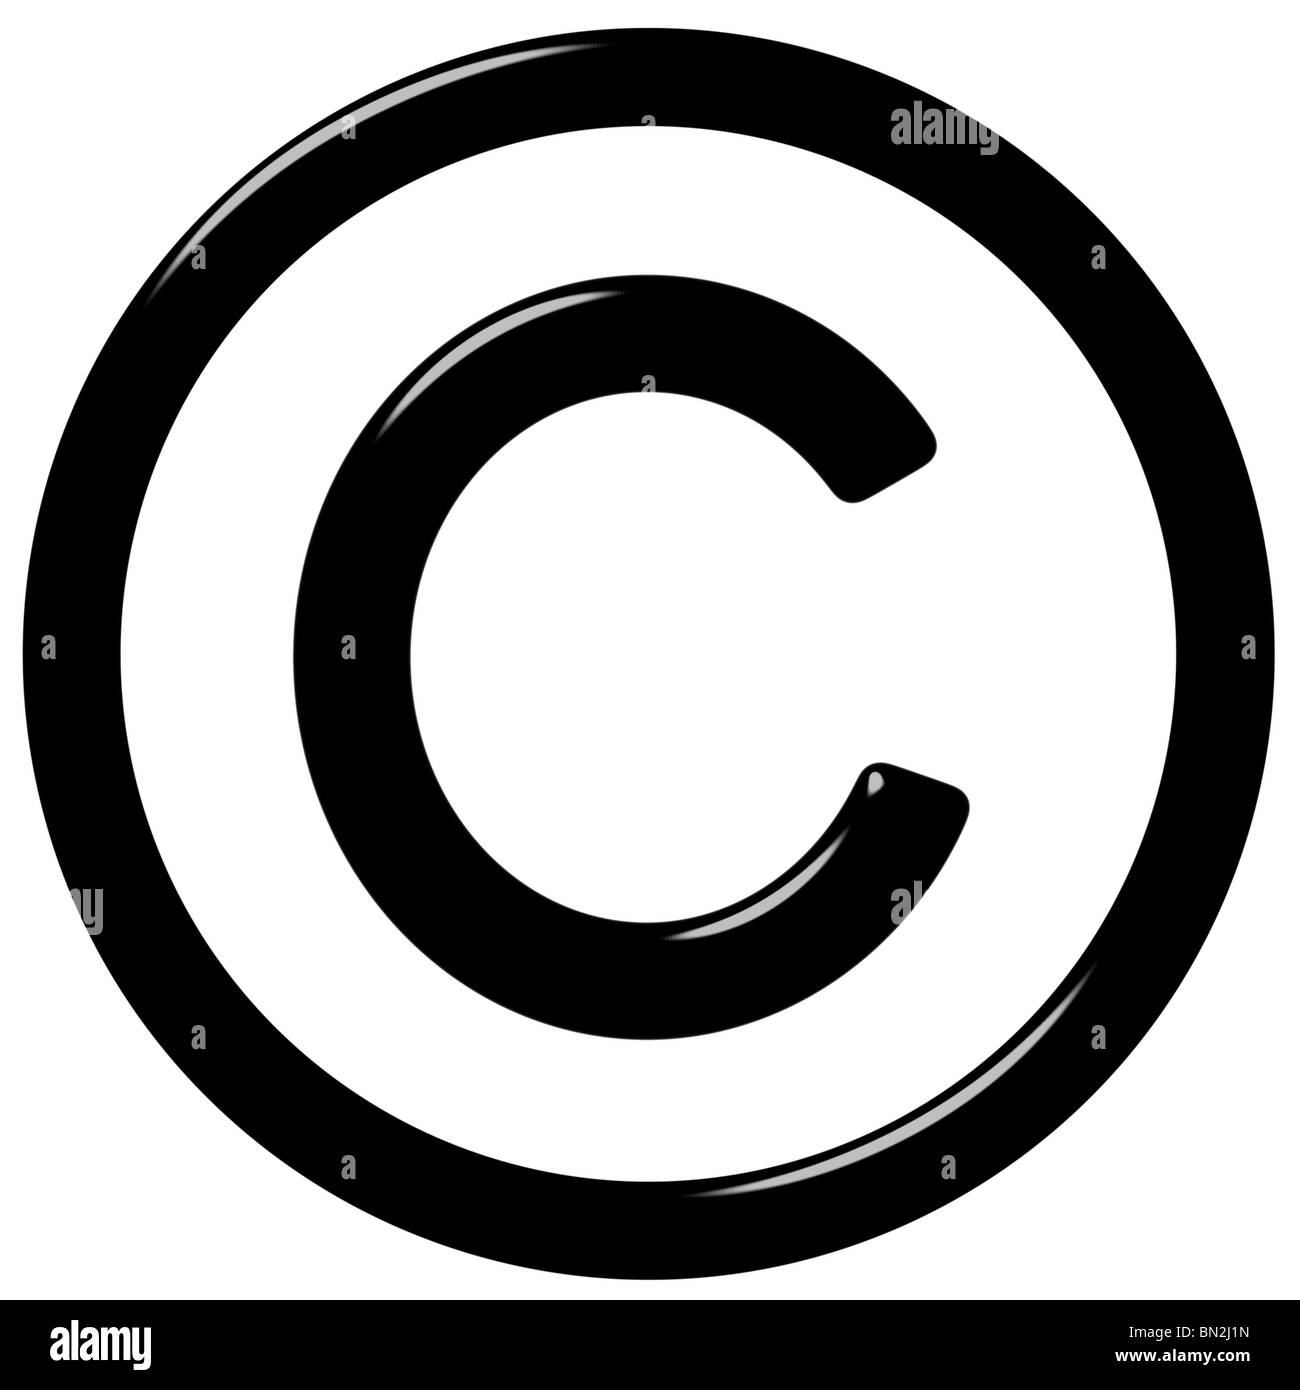 3d copyright symbol Stock Photo